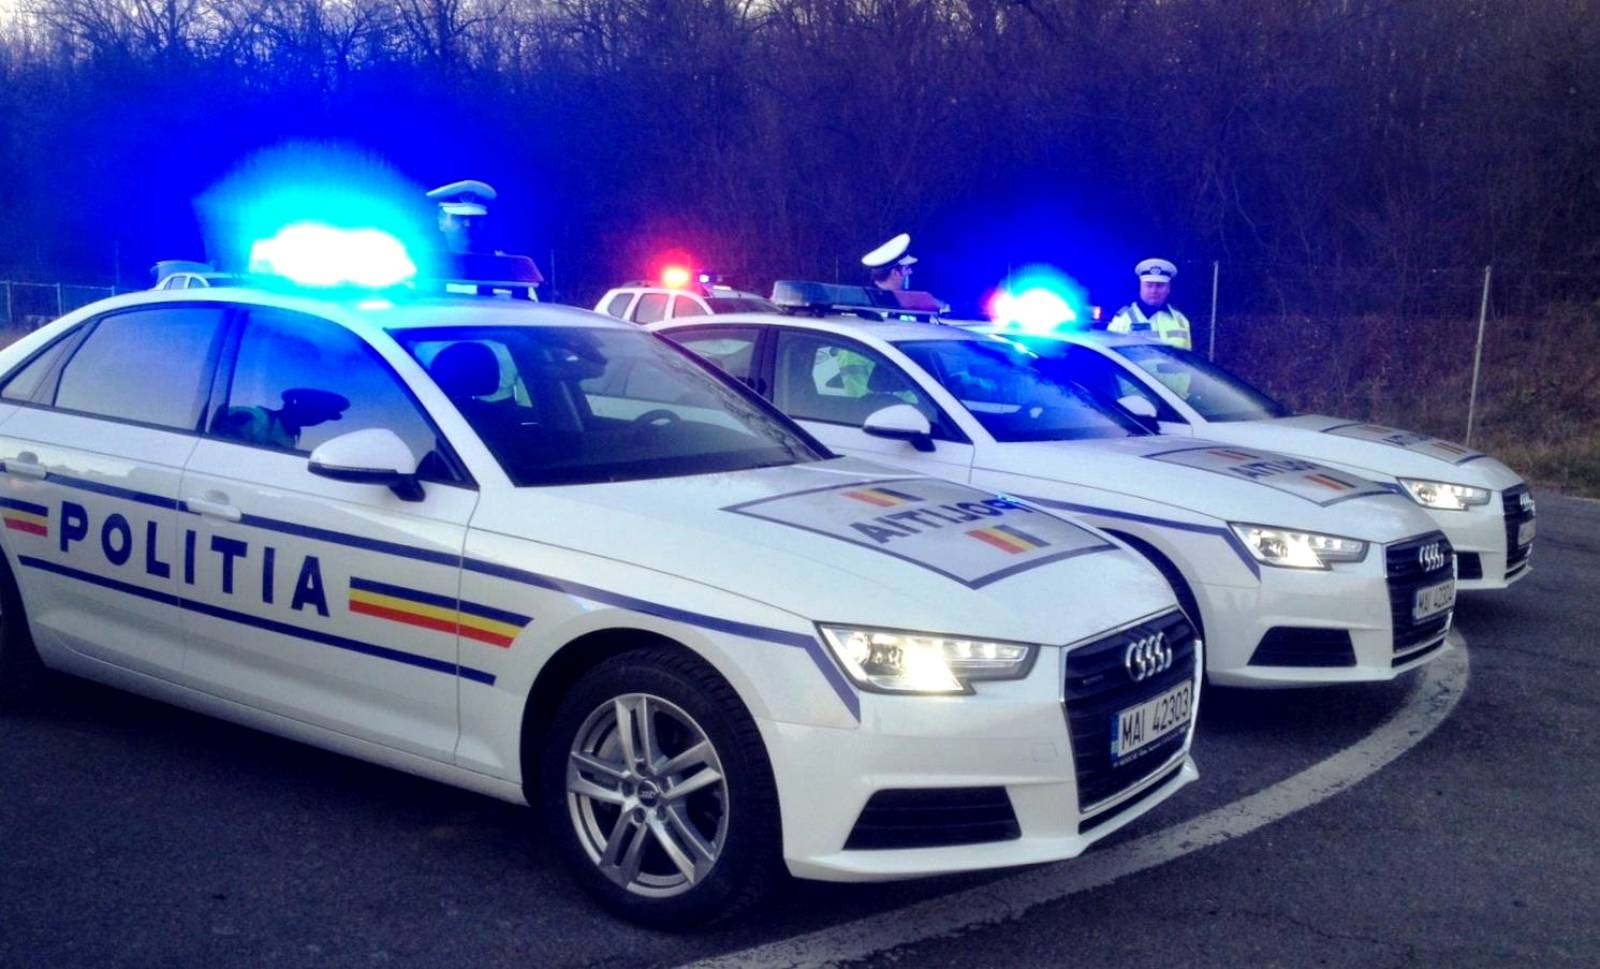 Romanian police warn drivers